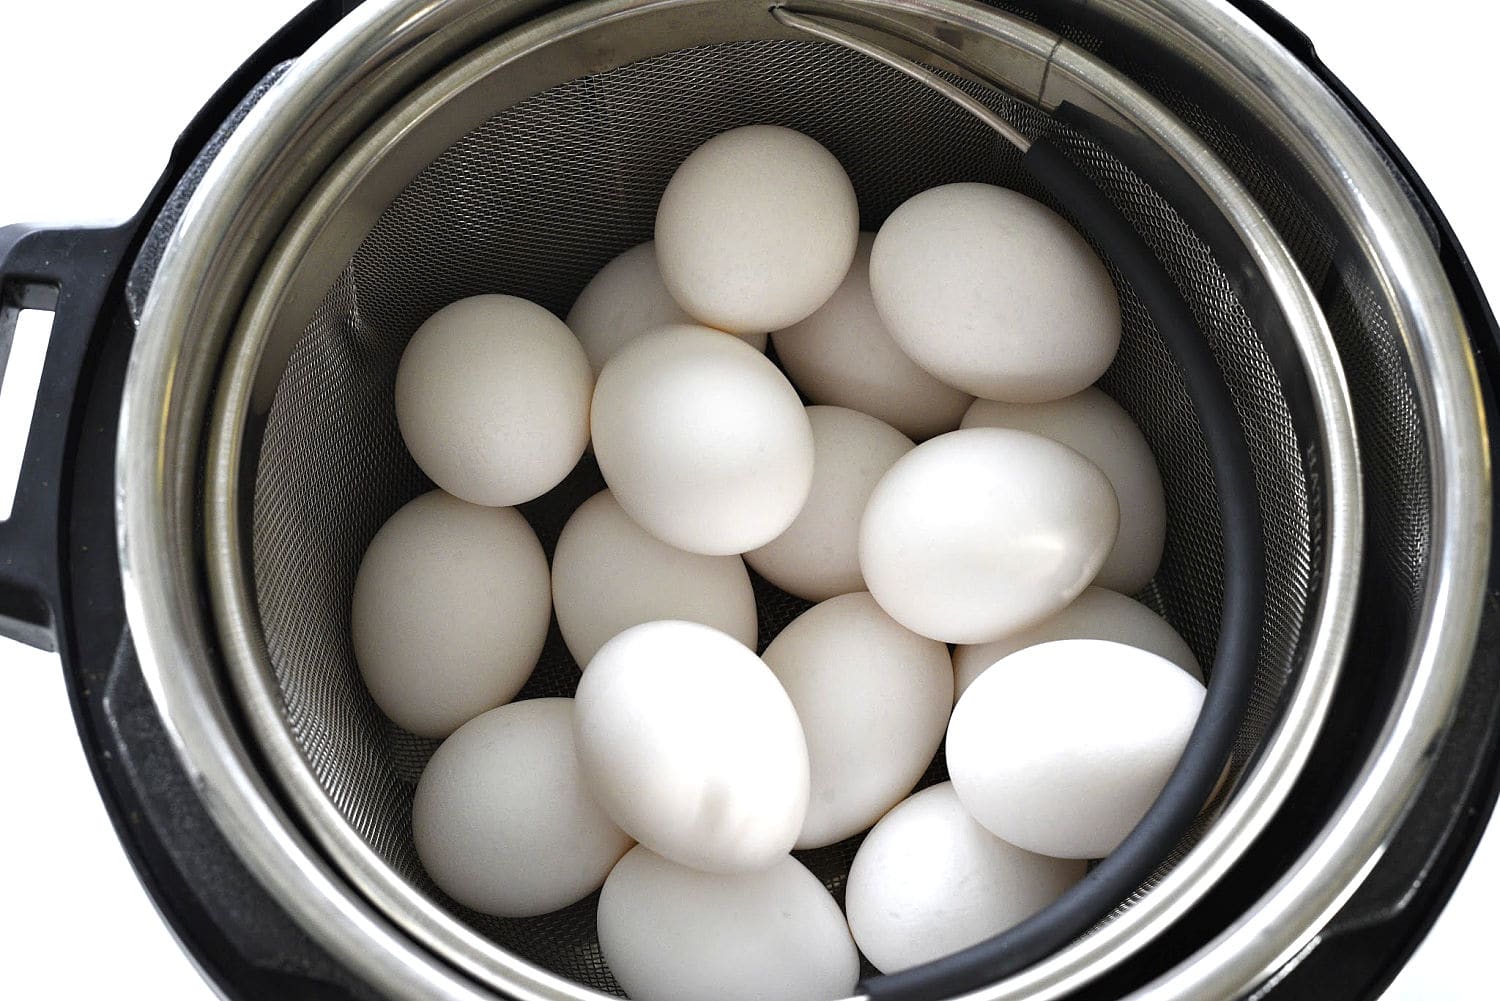 A pressure cooker full of eggs